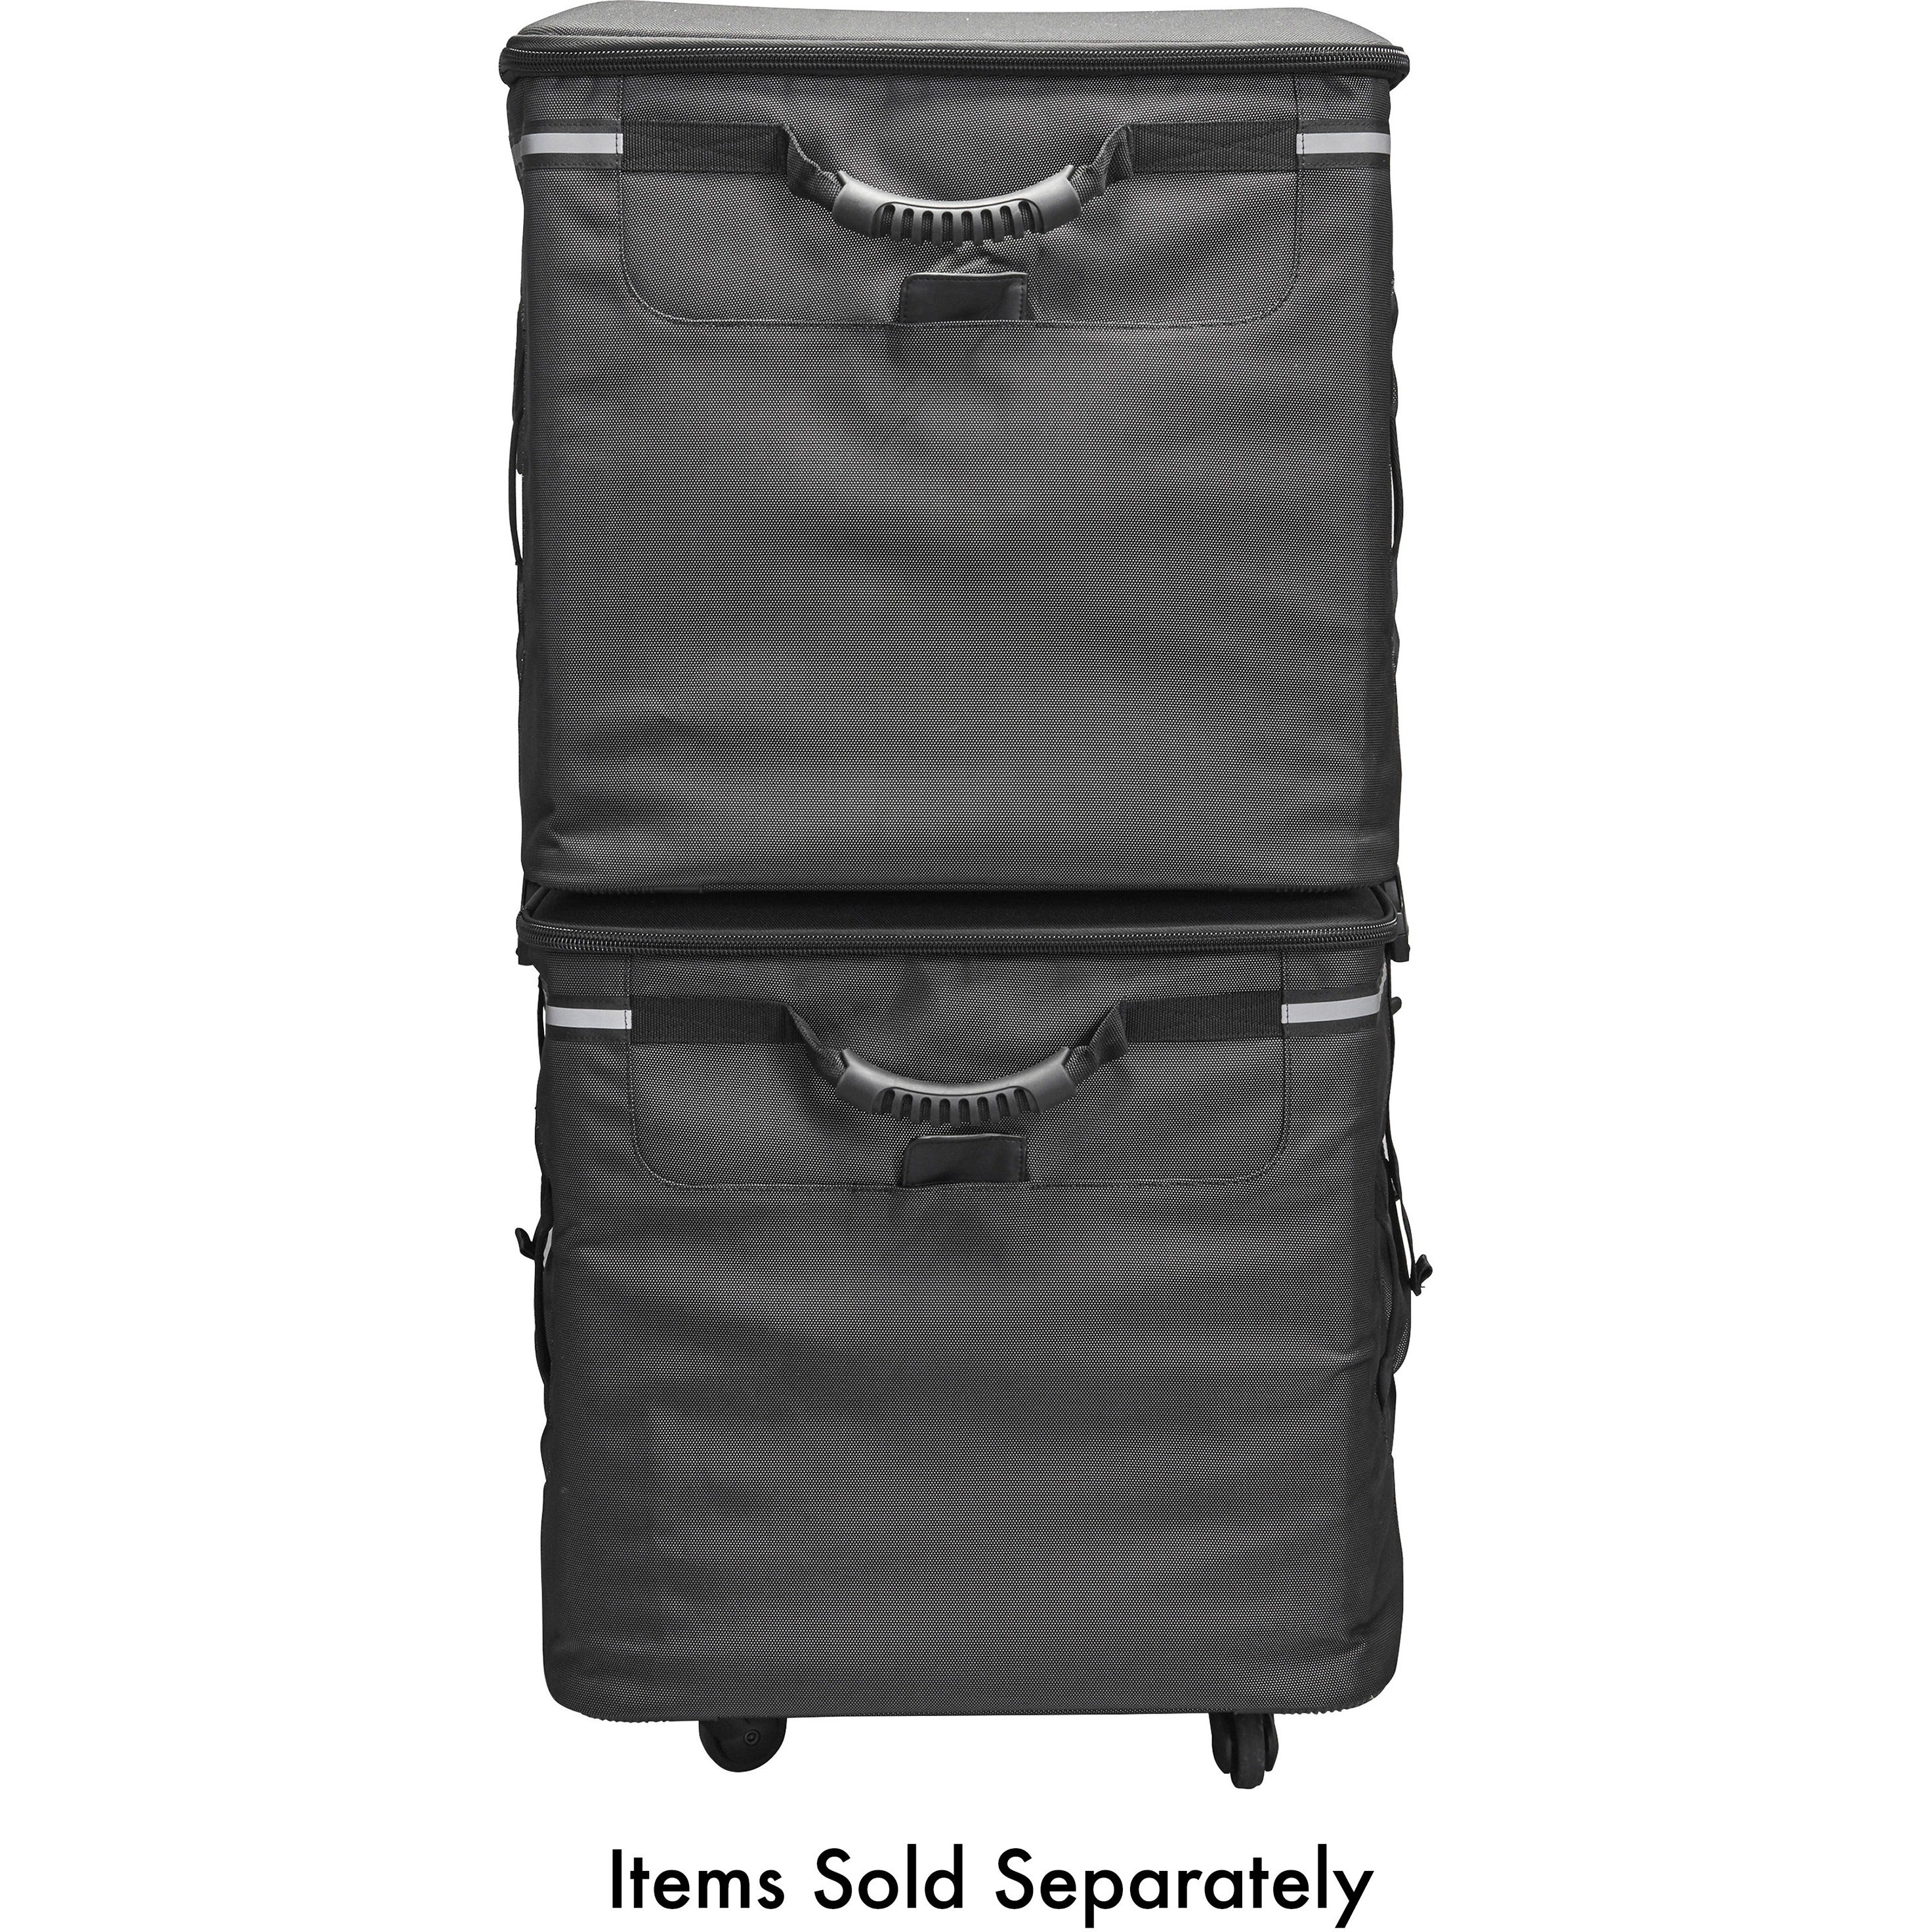 solo-pro-transporter-128-roller-travel-luggage-bottom-case-box-1-of-2-black-205-x-26-x-1875-bump-resistant-black-luggage-128l-volume-capacity-1-pack_uslssc11110 - 2